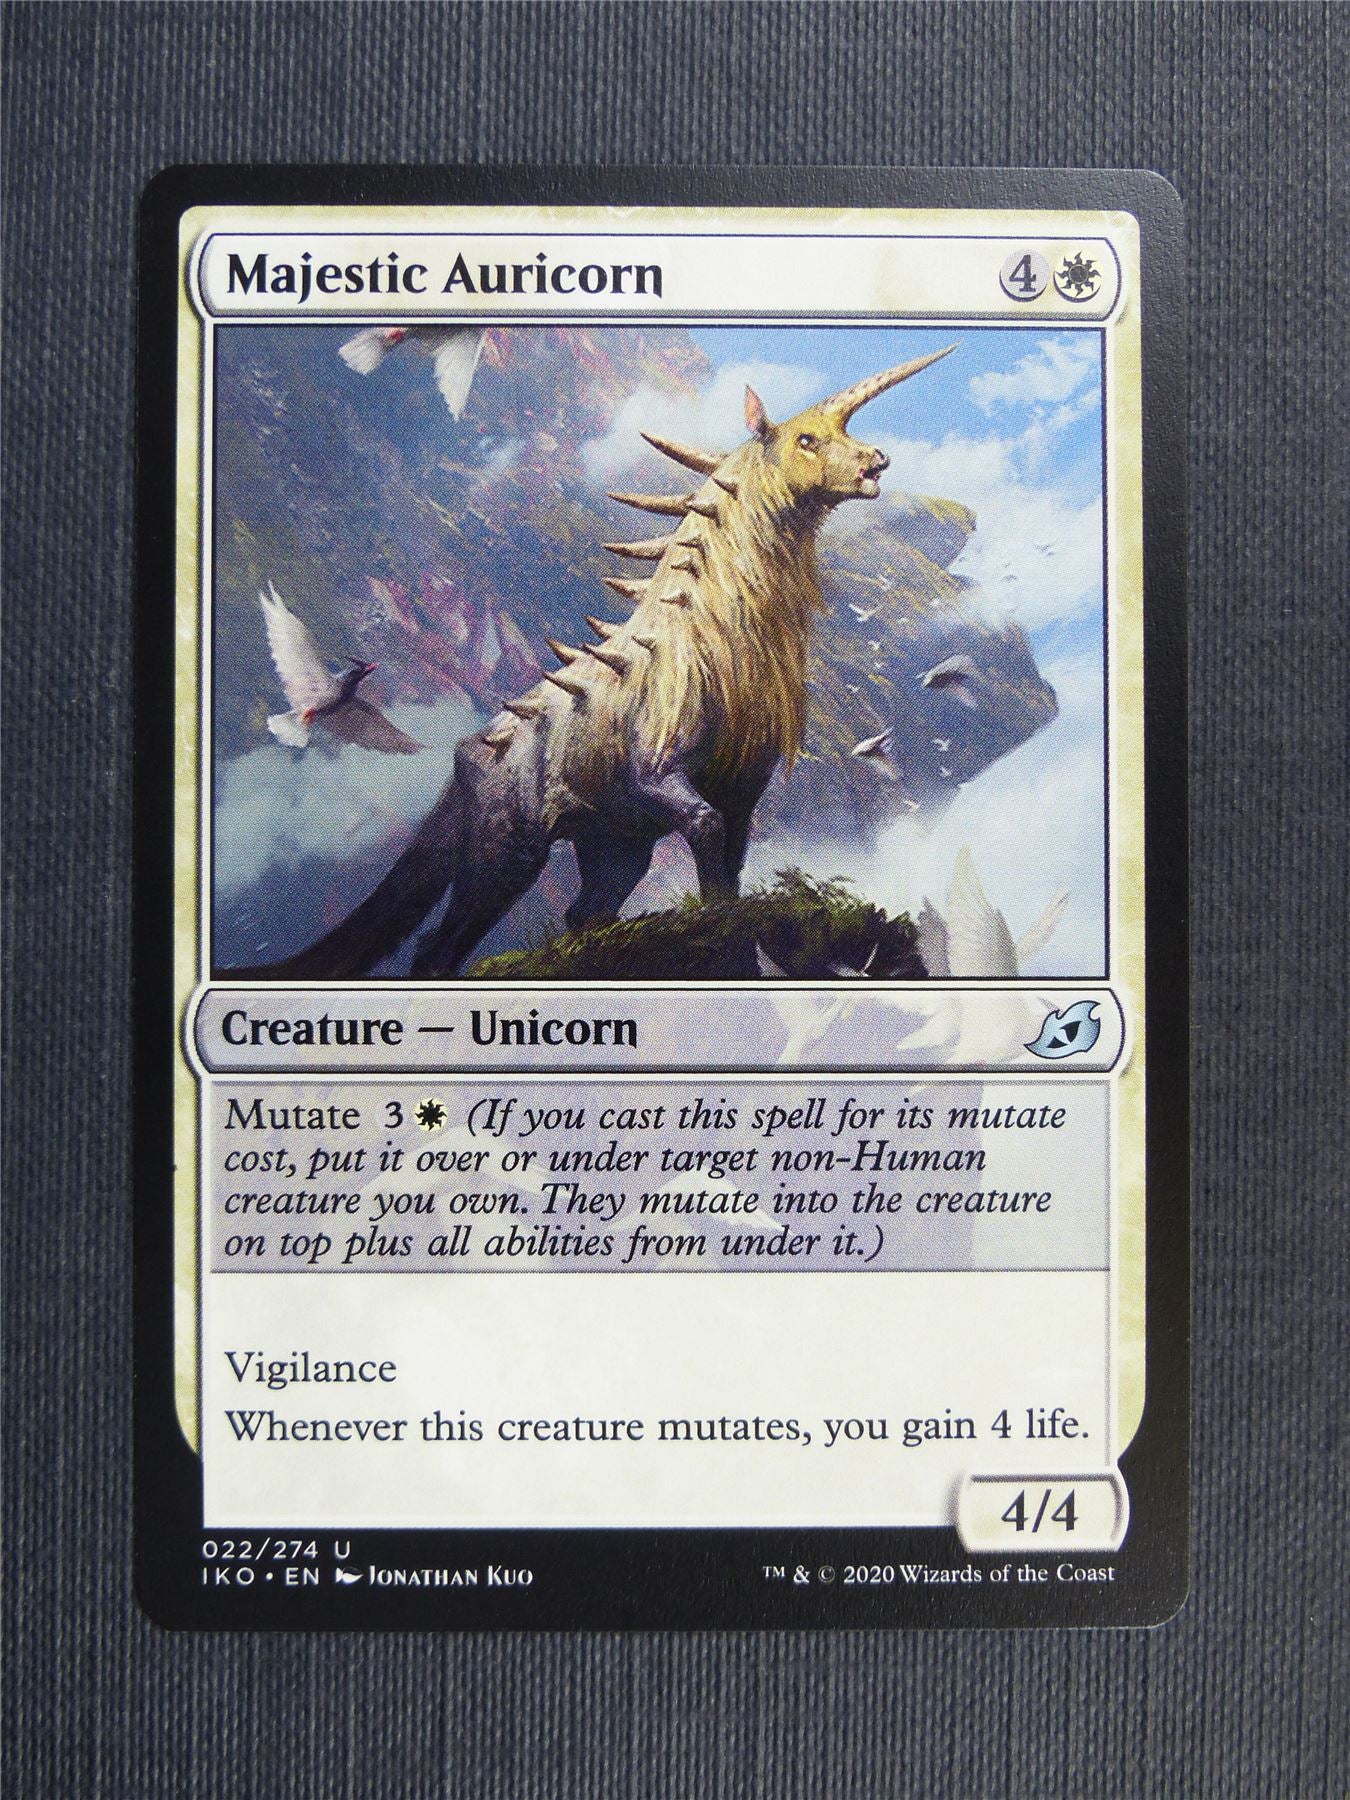 Majestic Auricorn - IKO Mtg Card